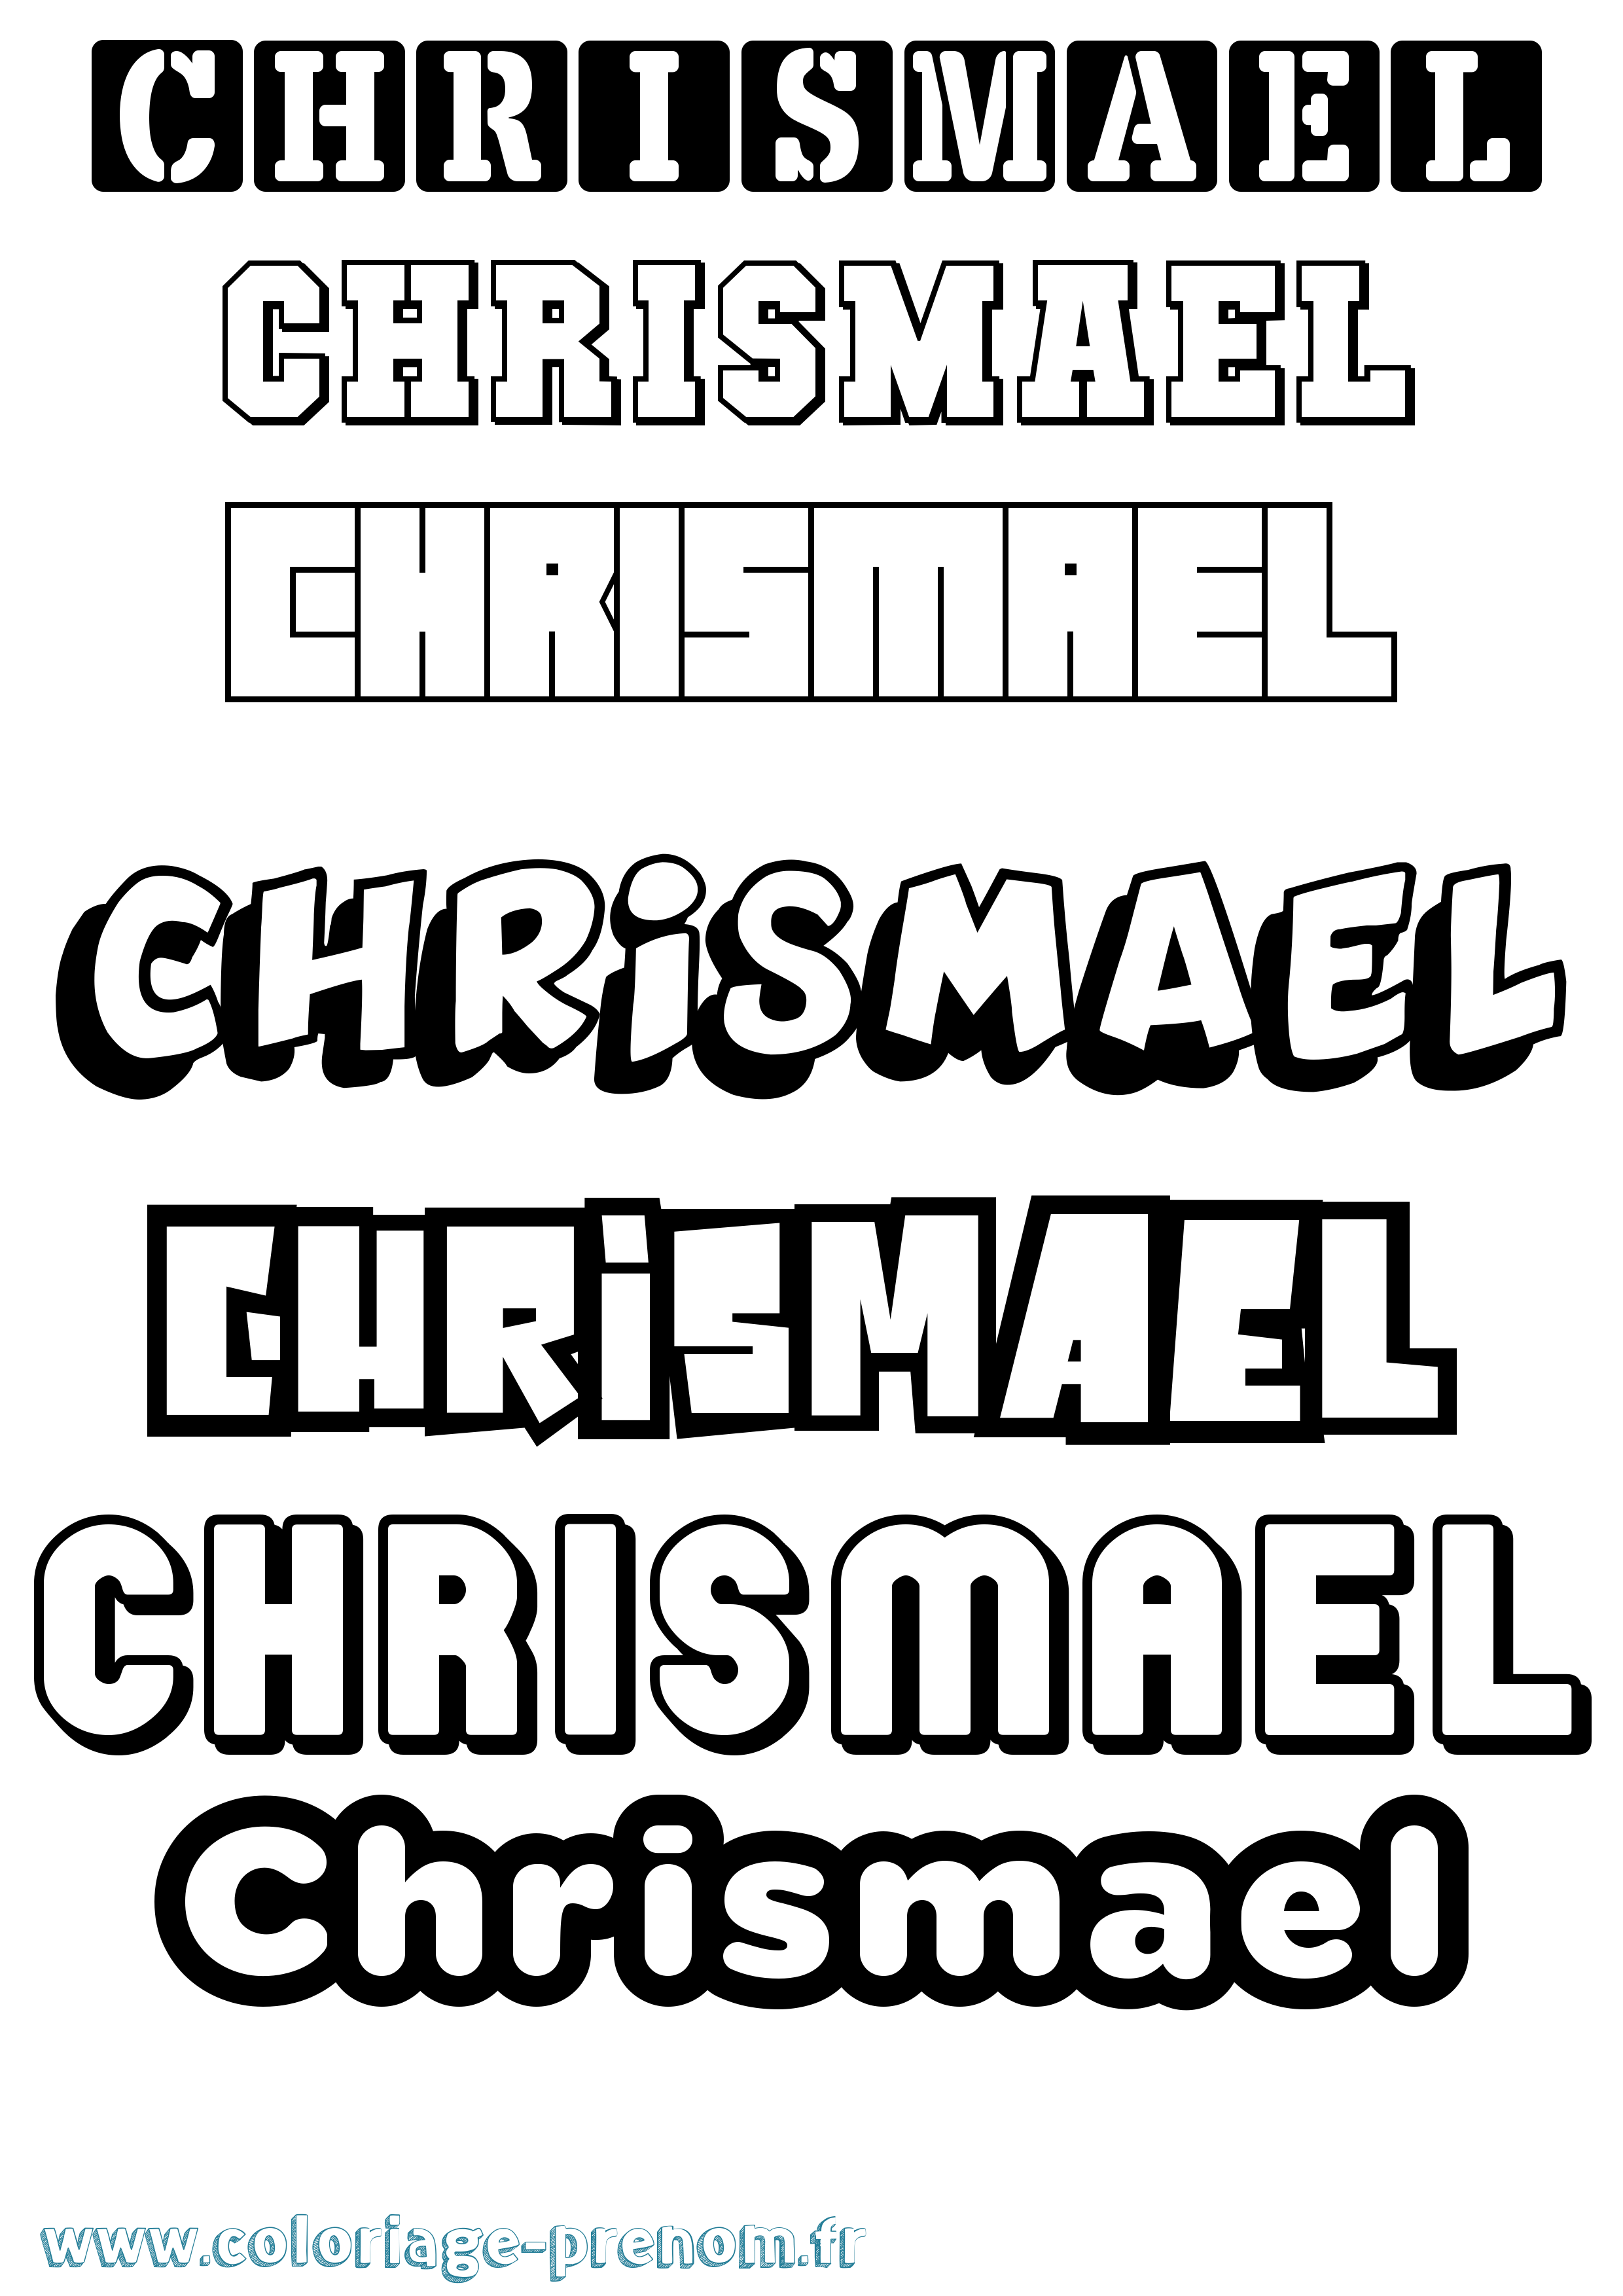 Coloriage prénom Chrismael Simple